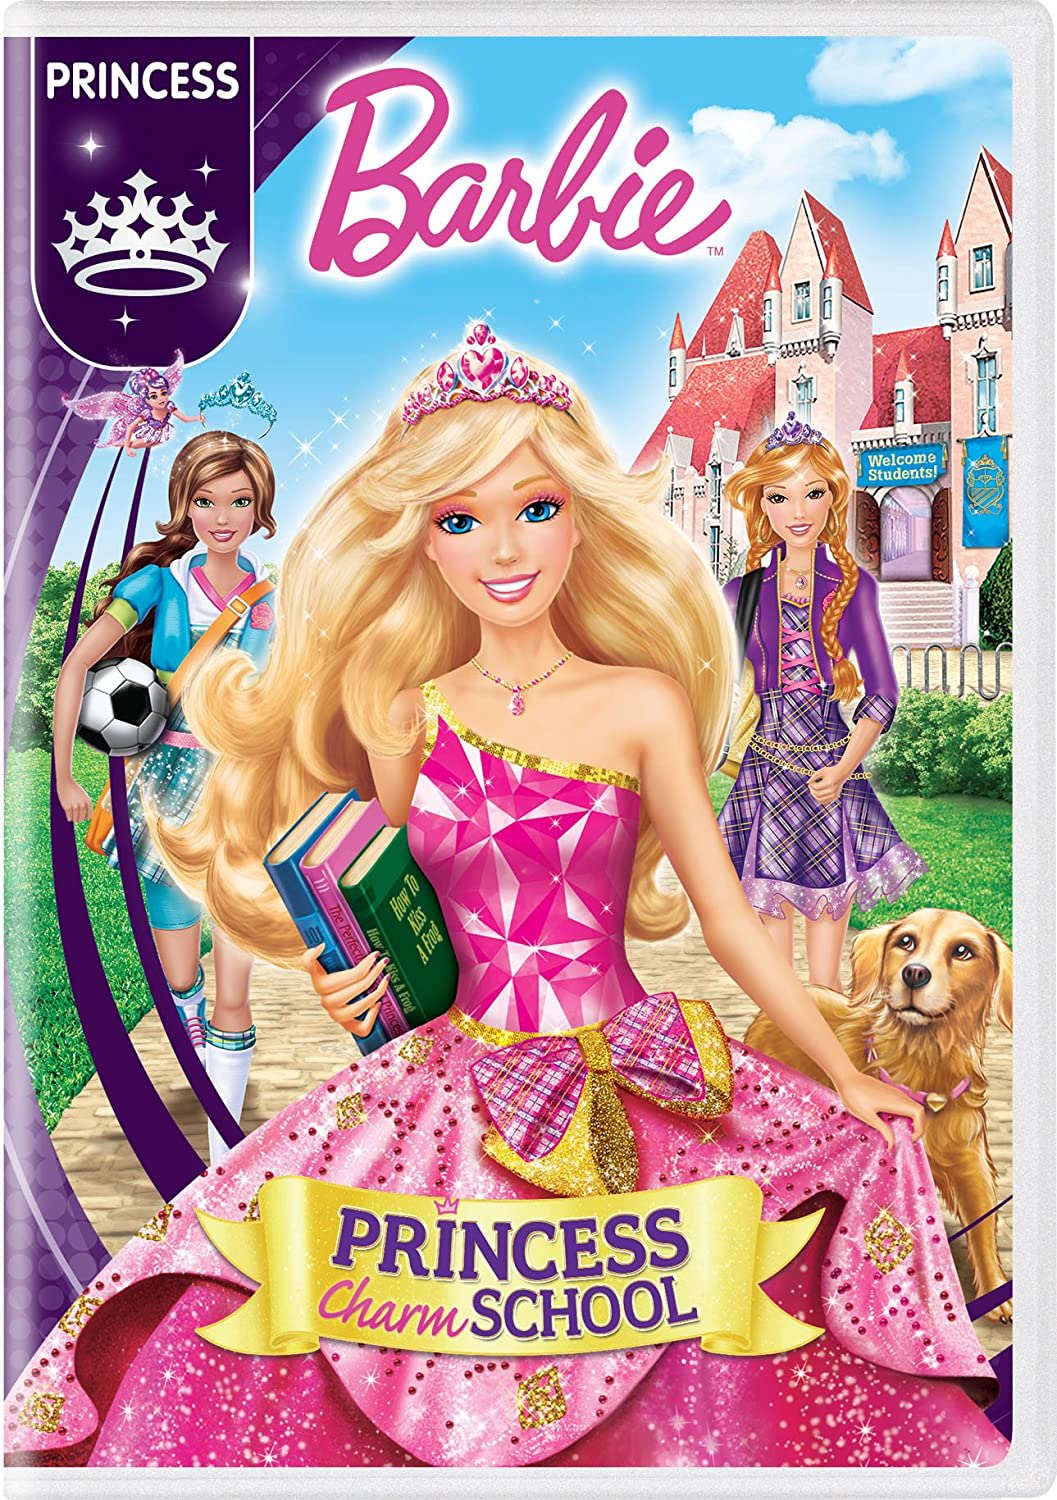 Xem Phim Barbie: Princess Charm School - Barbie: Princess Charm School - online truc tuyen vietsub mien phi hinh anh 1